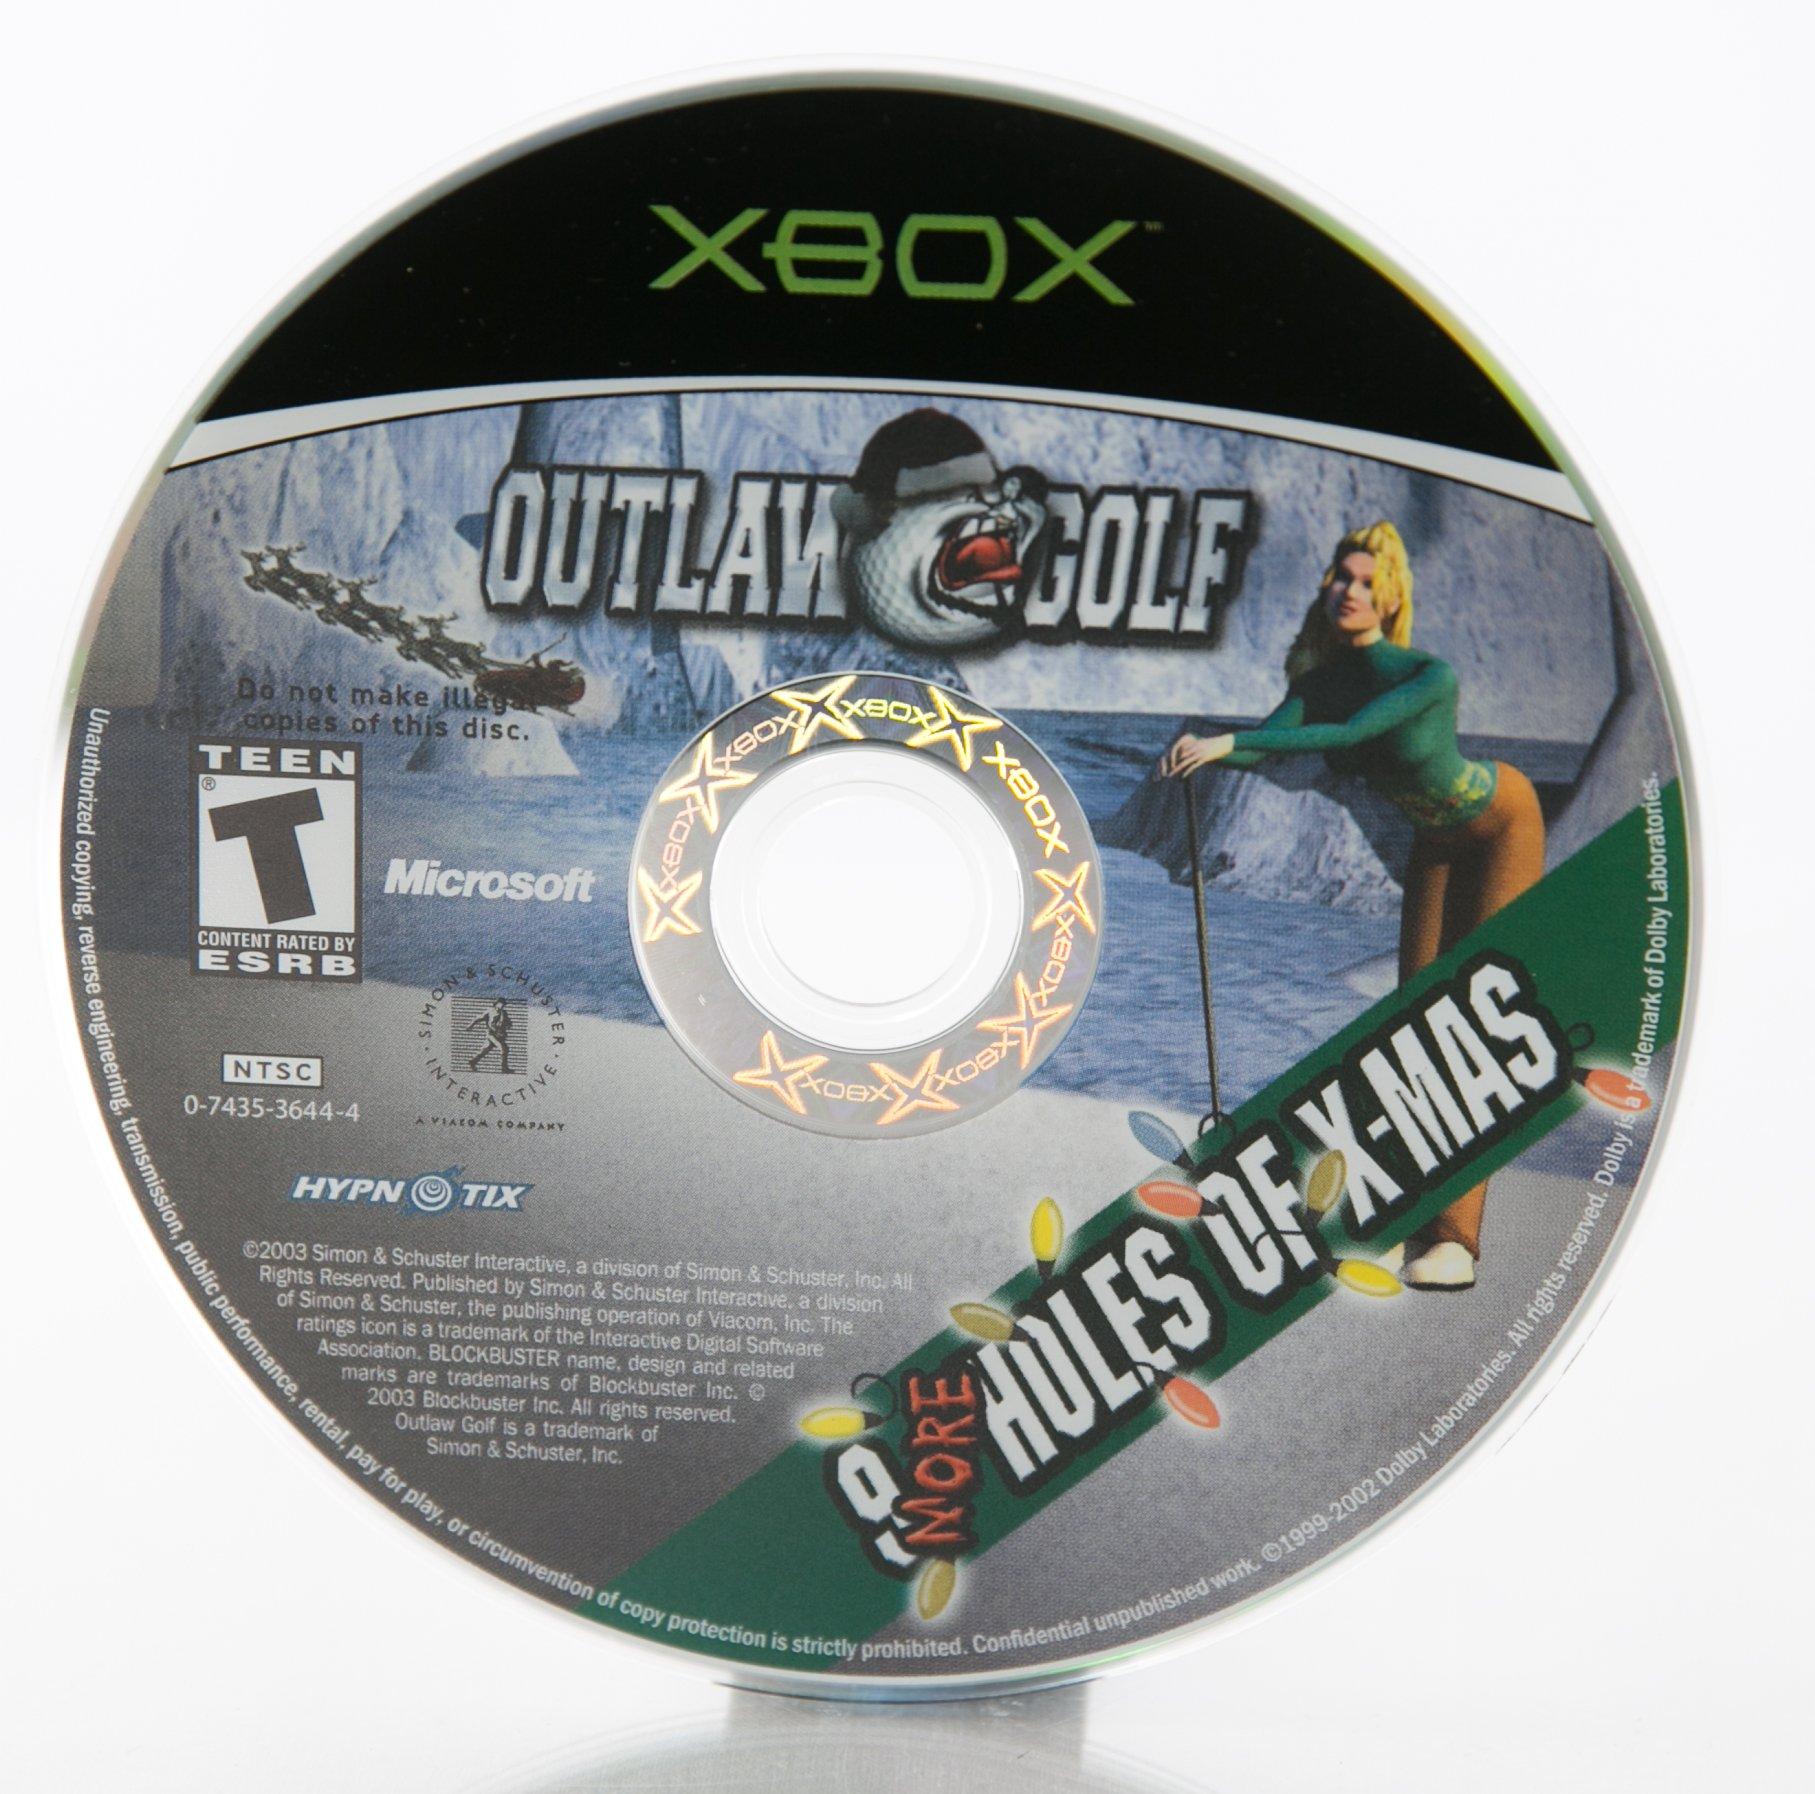 outlaw golf xbox one